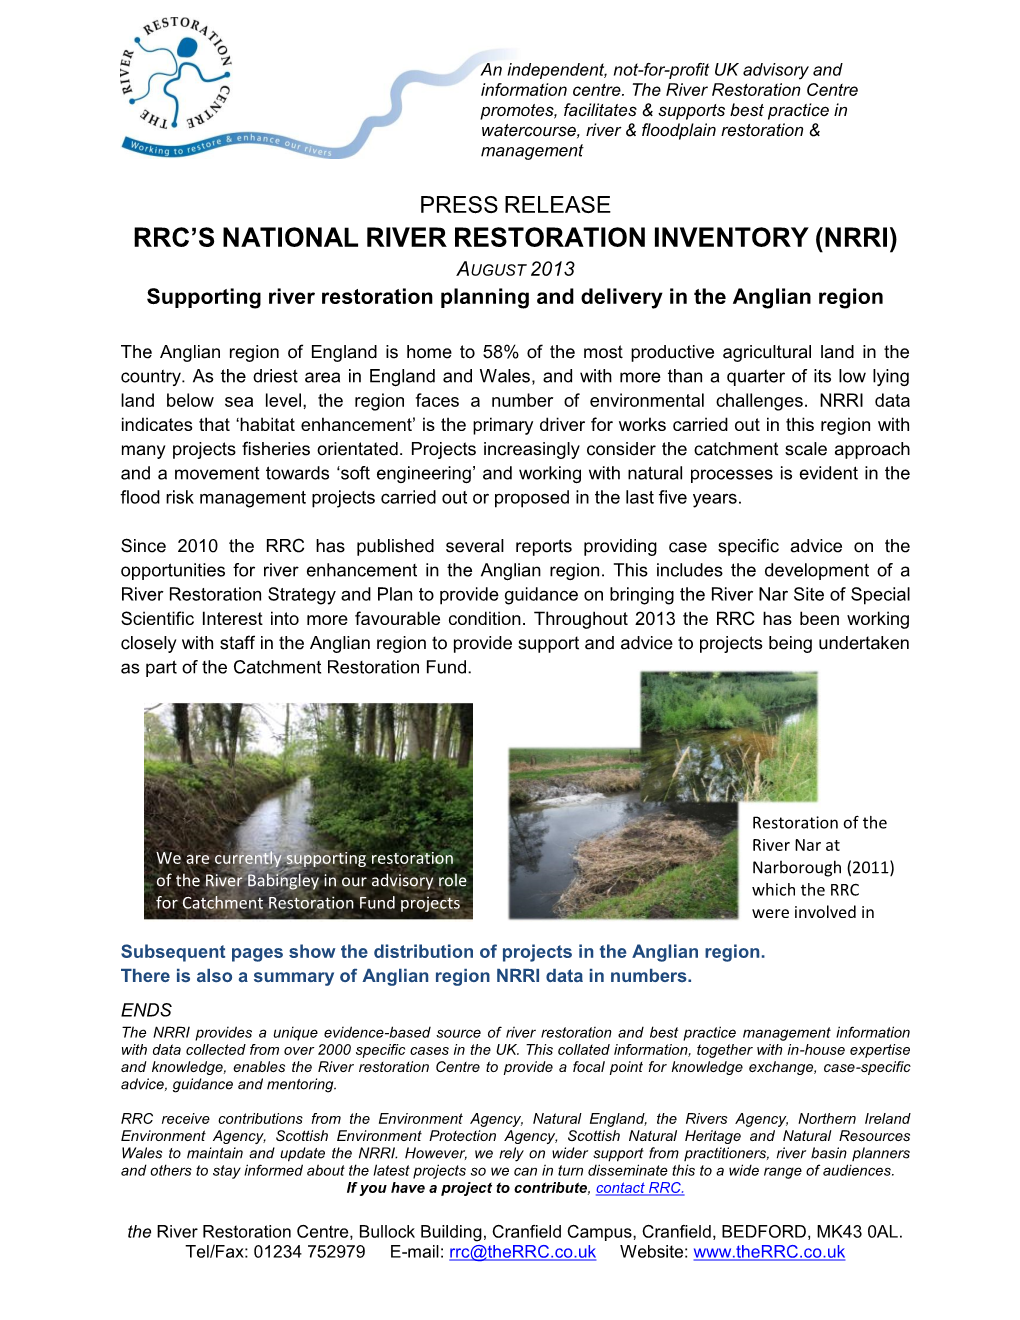 Rrc's National River Restoration Inventory (Nrri)